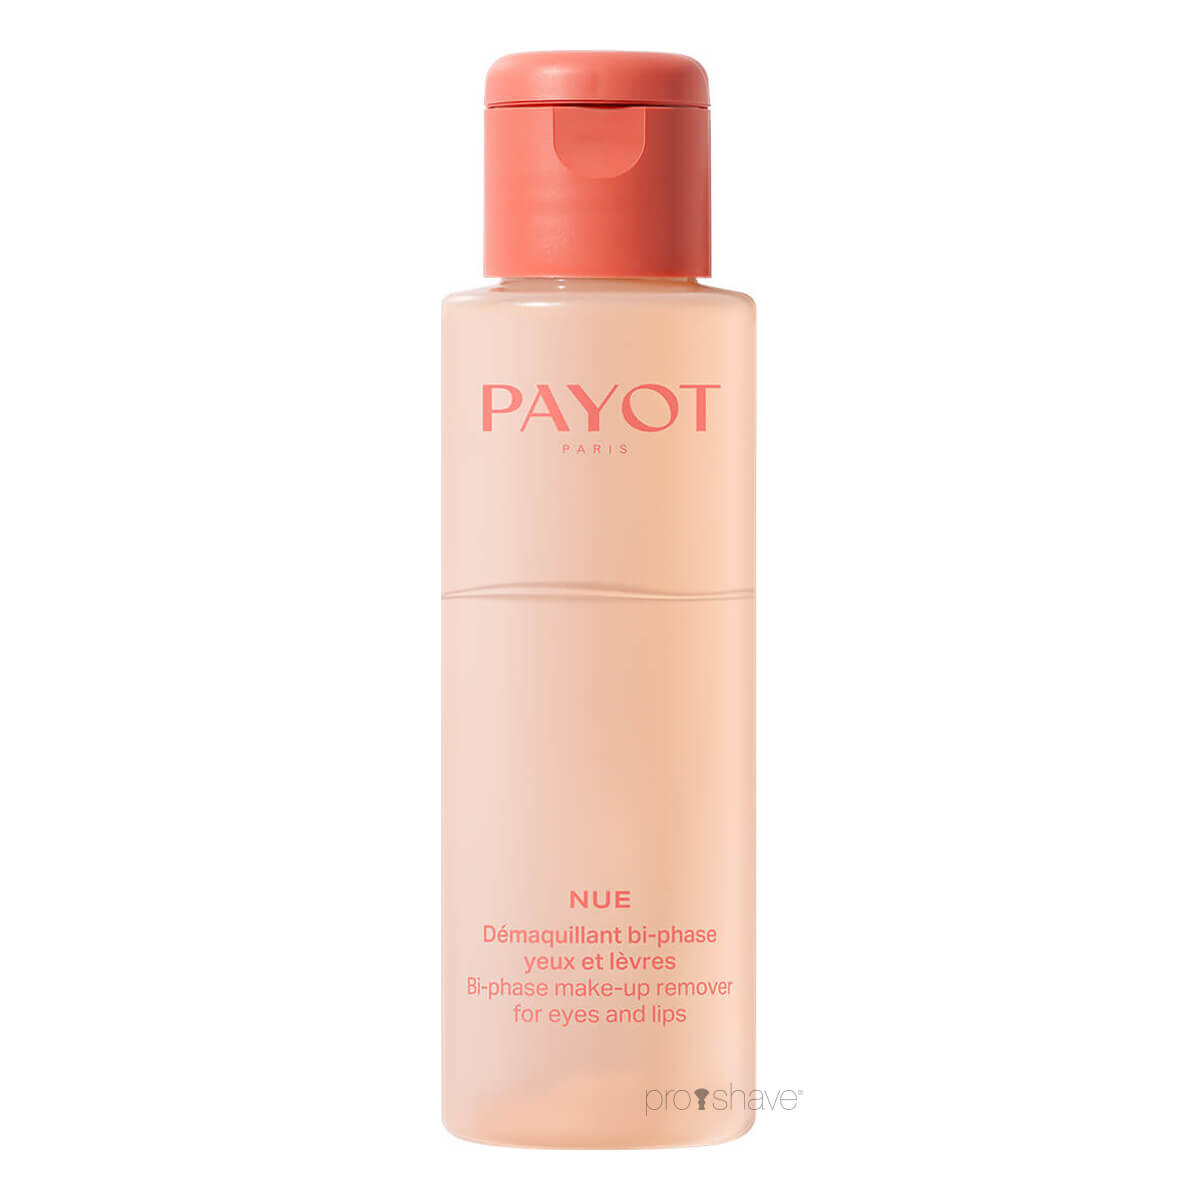 Se Payot Nue Bi-Phase Make-Up Remover for Eyes & Lips, 100 ml. hos Proshave